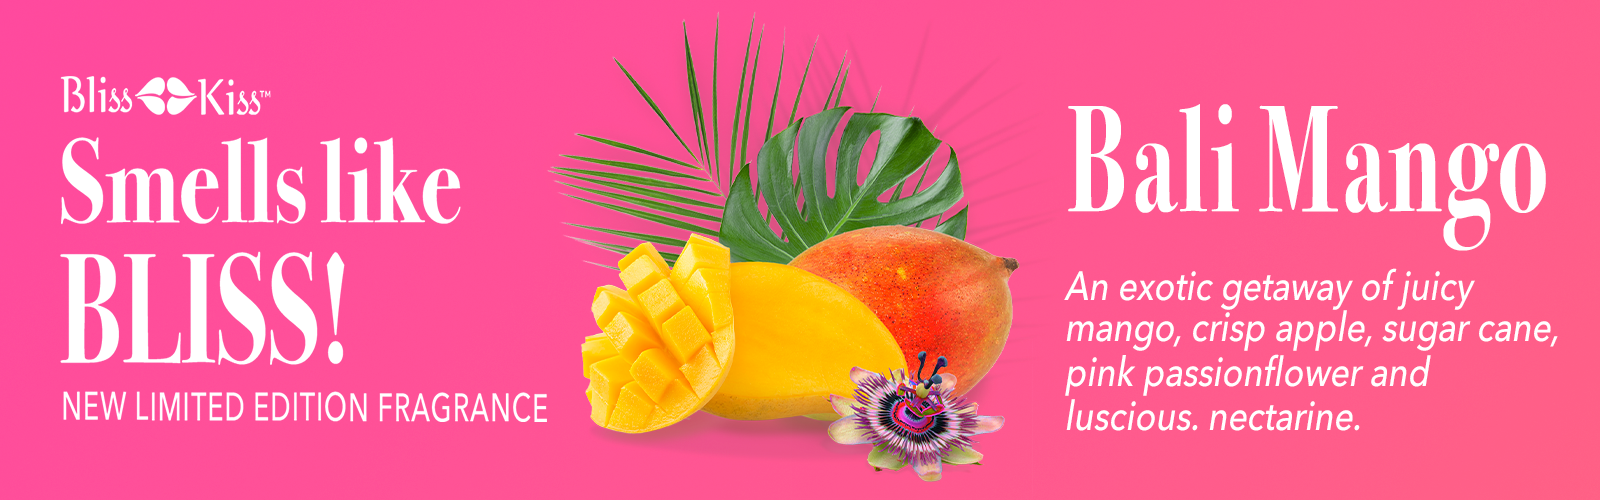 fragrance-banner-bali-mango.png